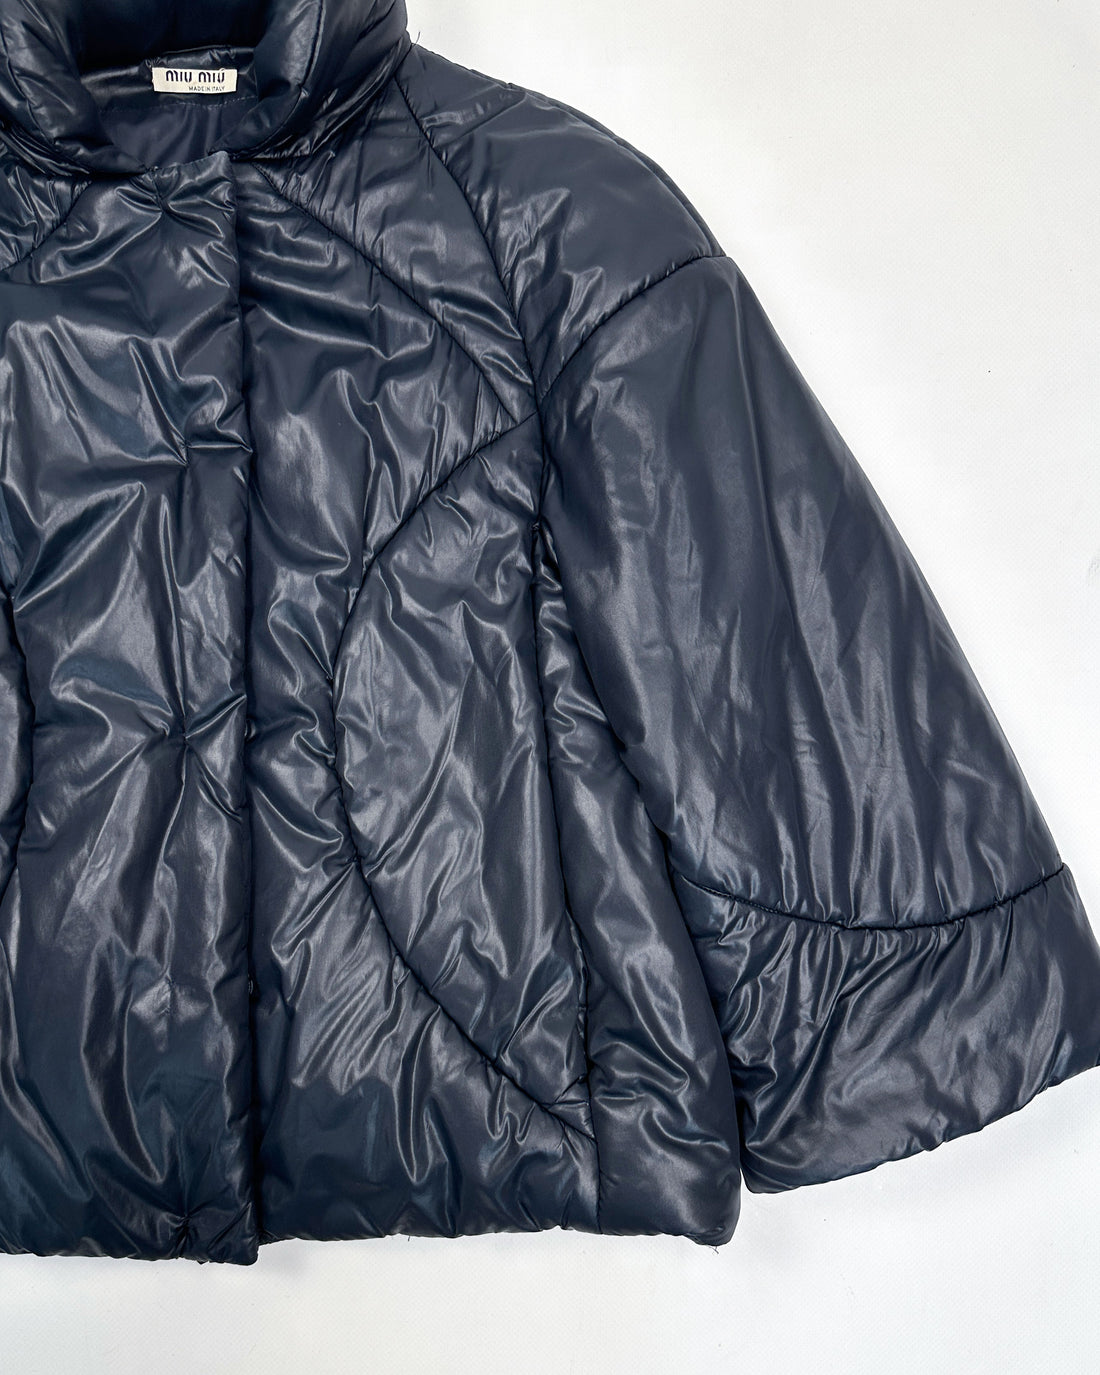 Miu Miu Charcoal Geometric Puffer Jacket 2000's